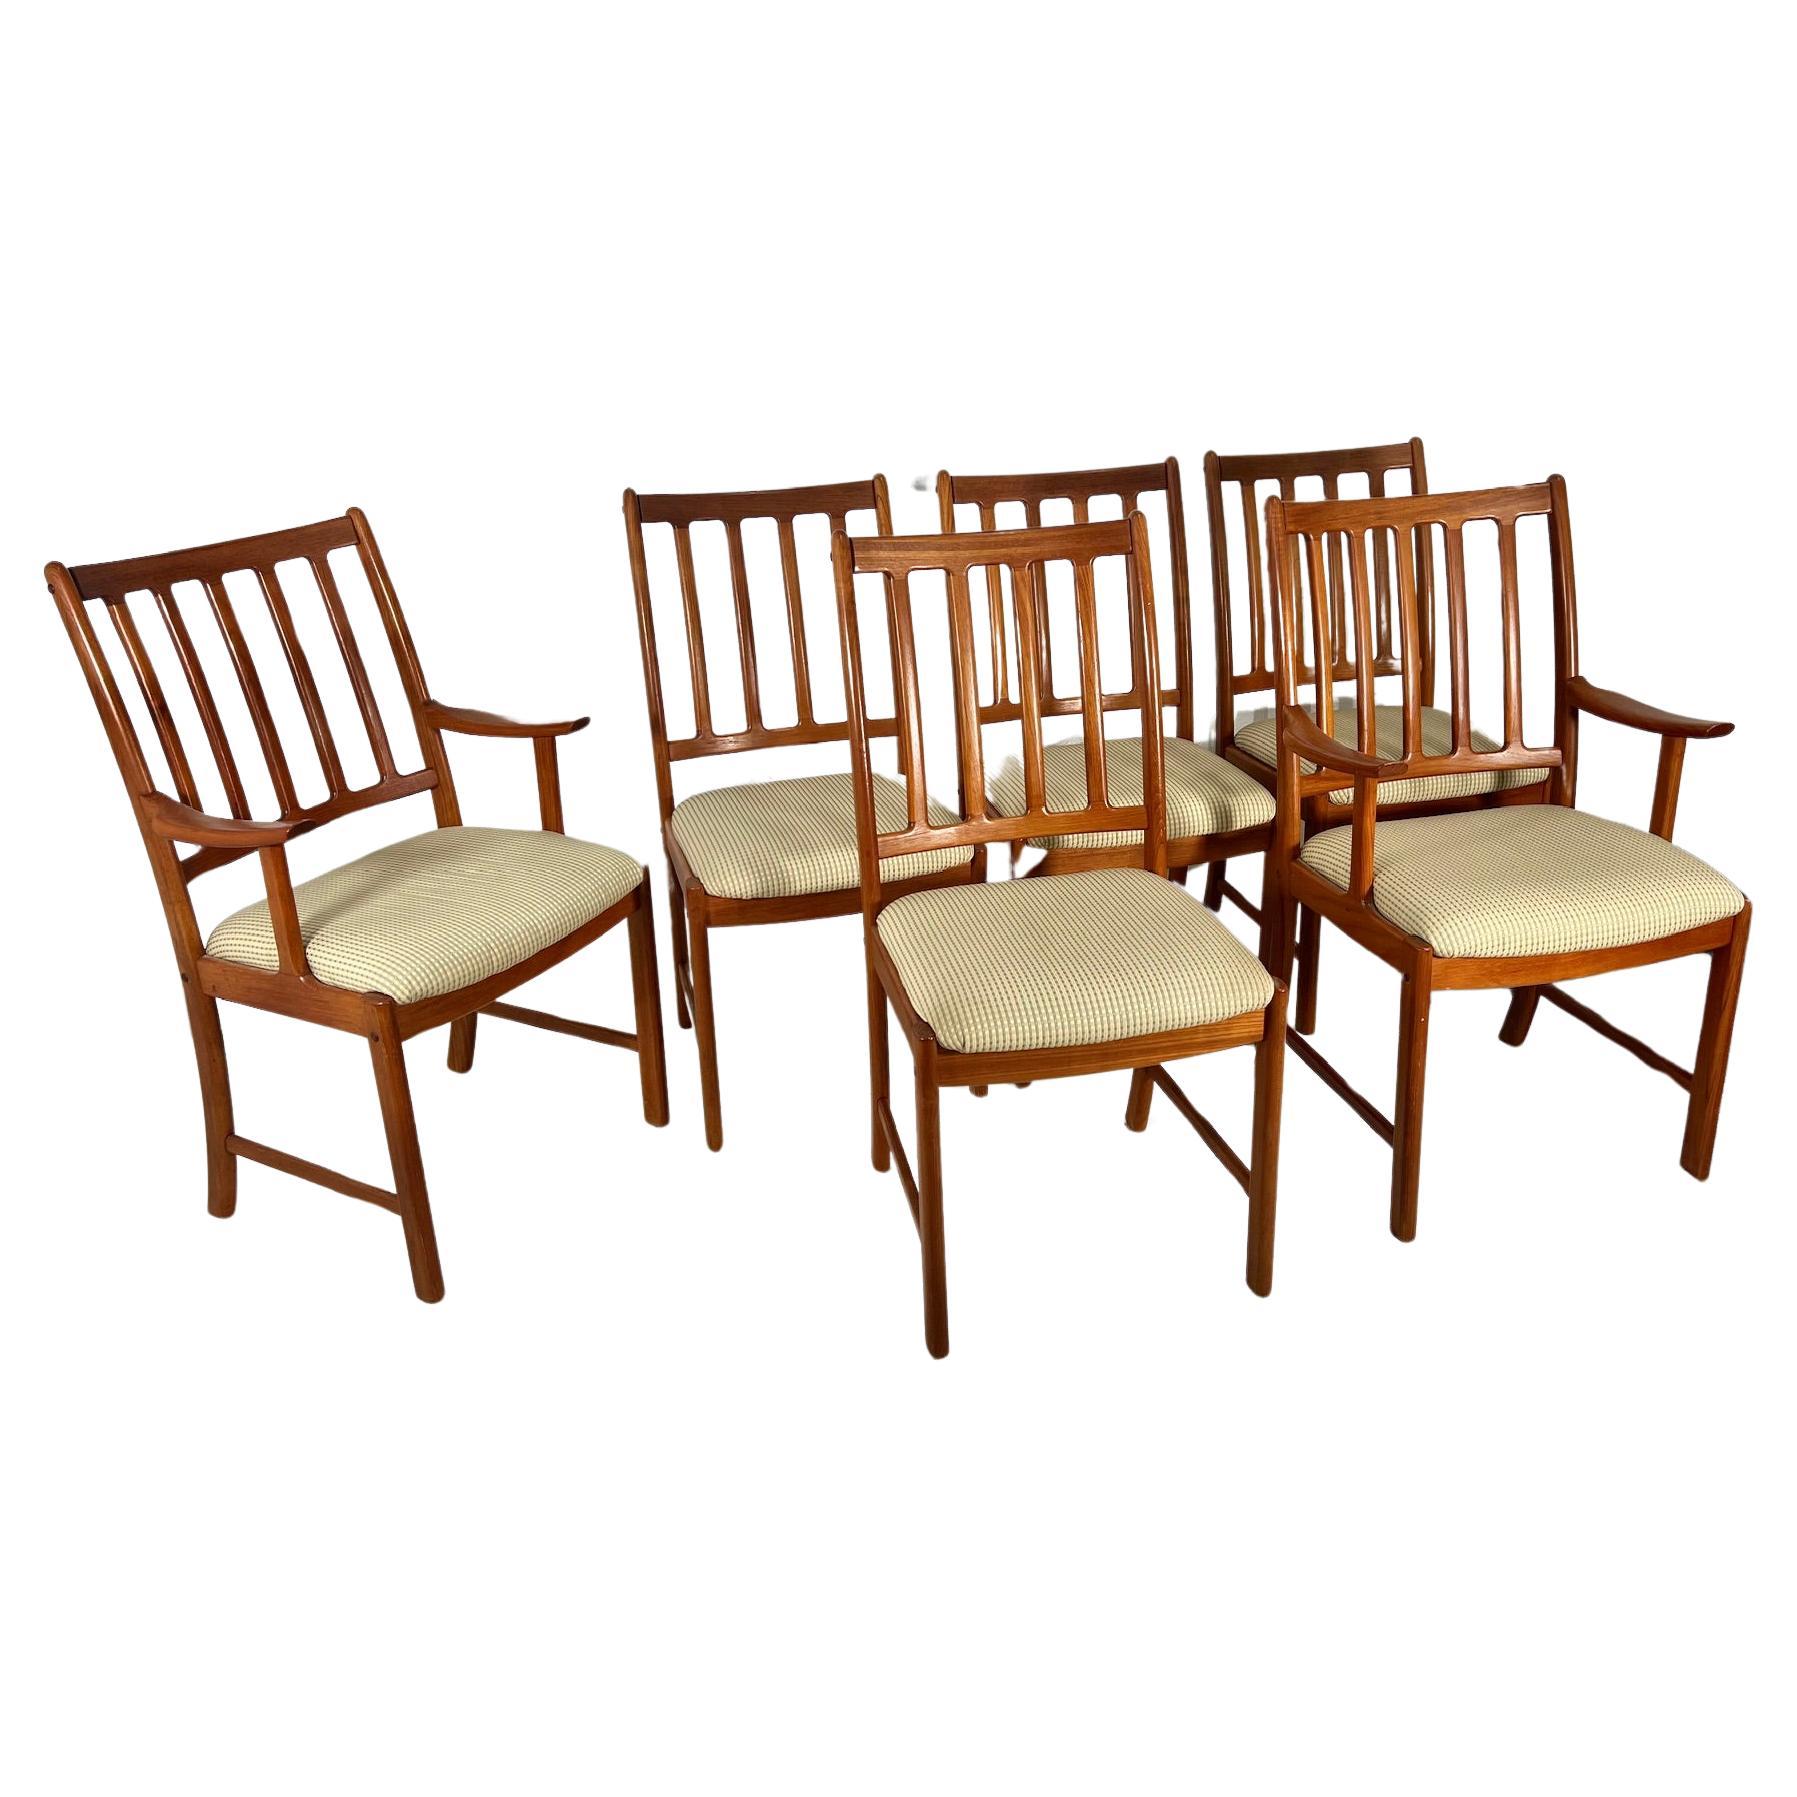 Set Of 6 Mid Century Modern Teak Chairs By Johannes Andersen For Uldum Mobler